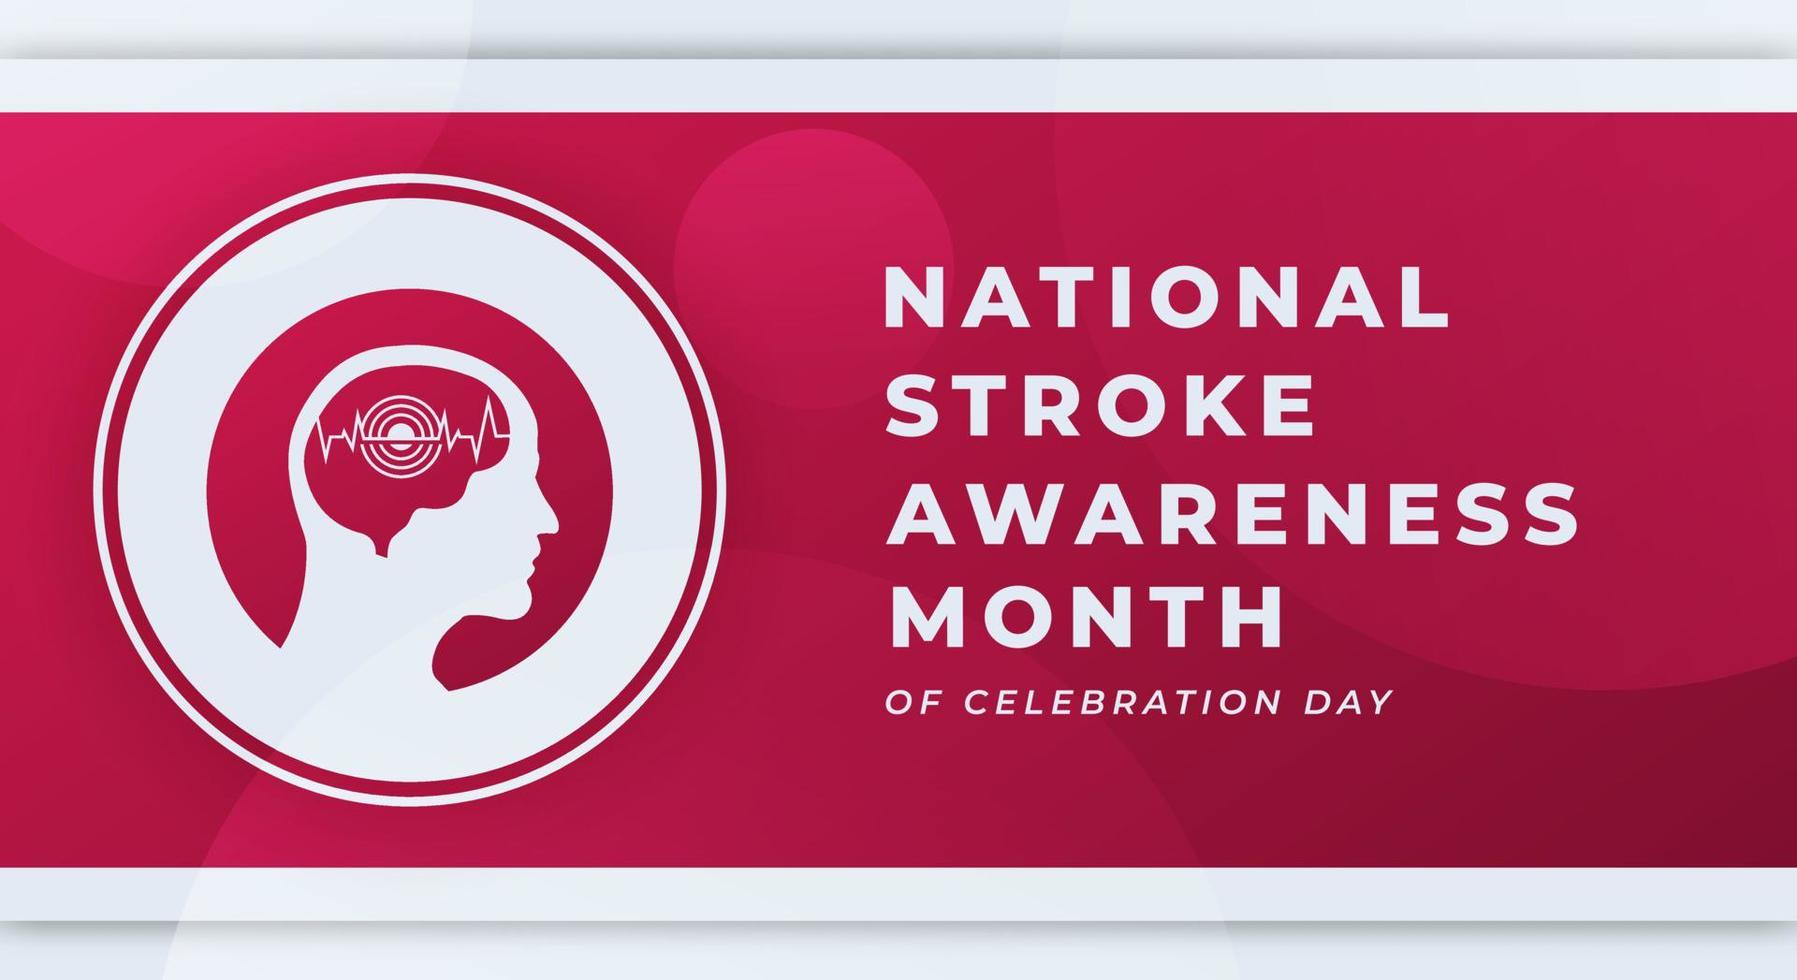 Happy National Stroke Awareness Month Celebration Vector Design Illustration for Background, Poster, Banner, Advertising, Greeting Card